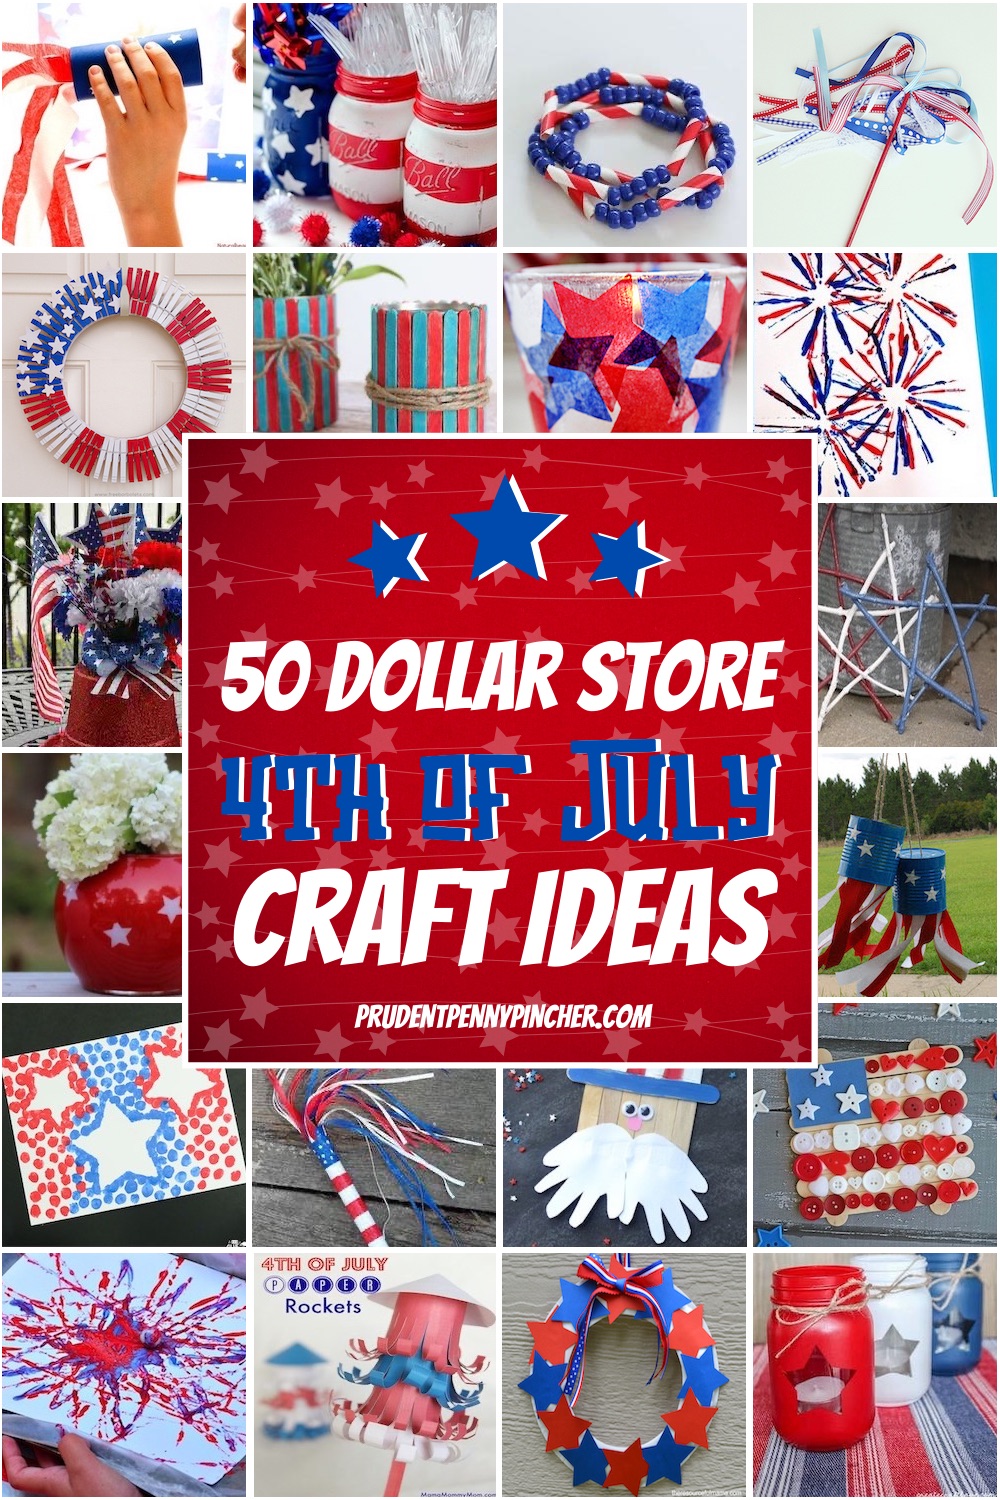 https://www.prudentpennypincher.com/wp-content/uploads/2020/05/dollar-store-4th-of-july-crafts.jpg